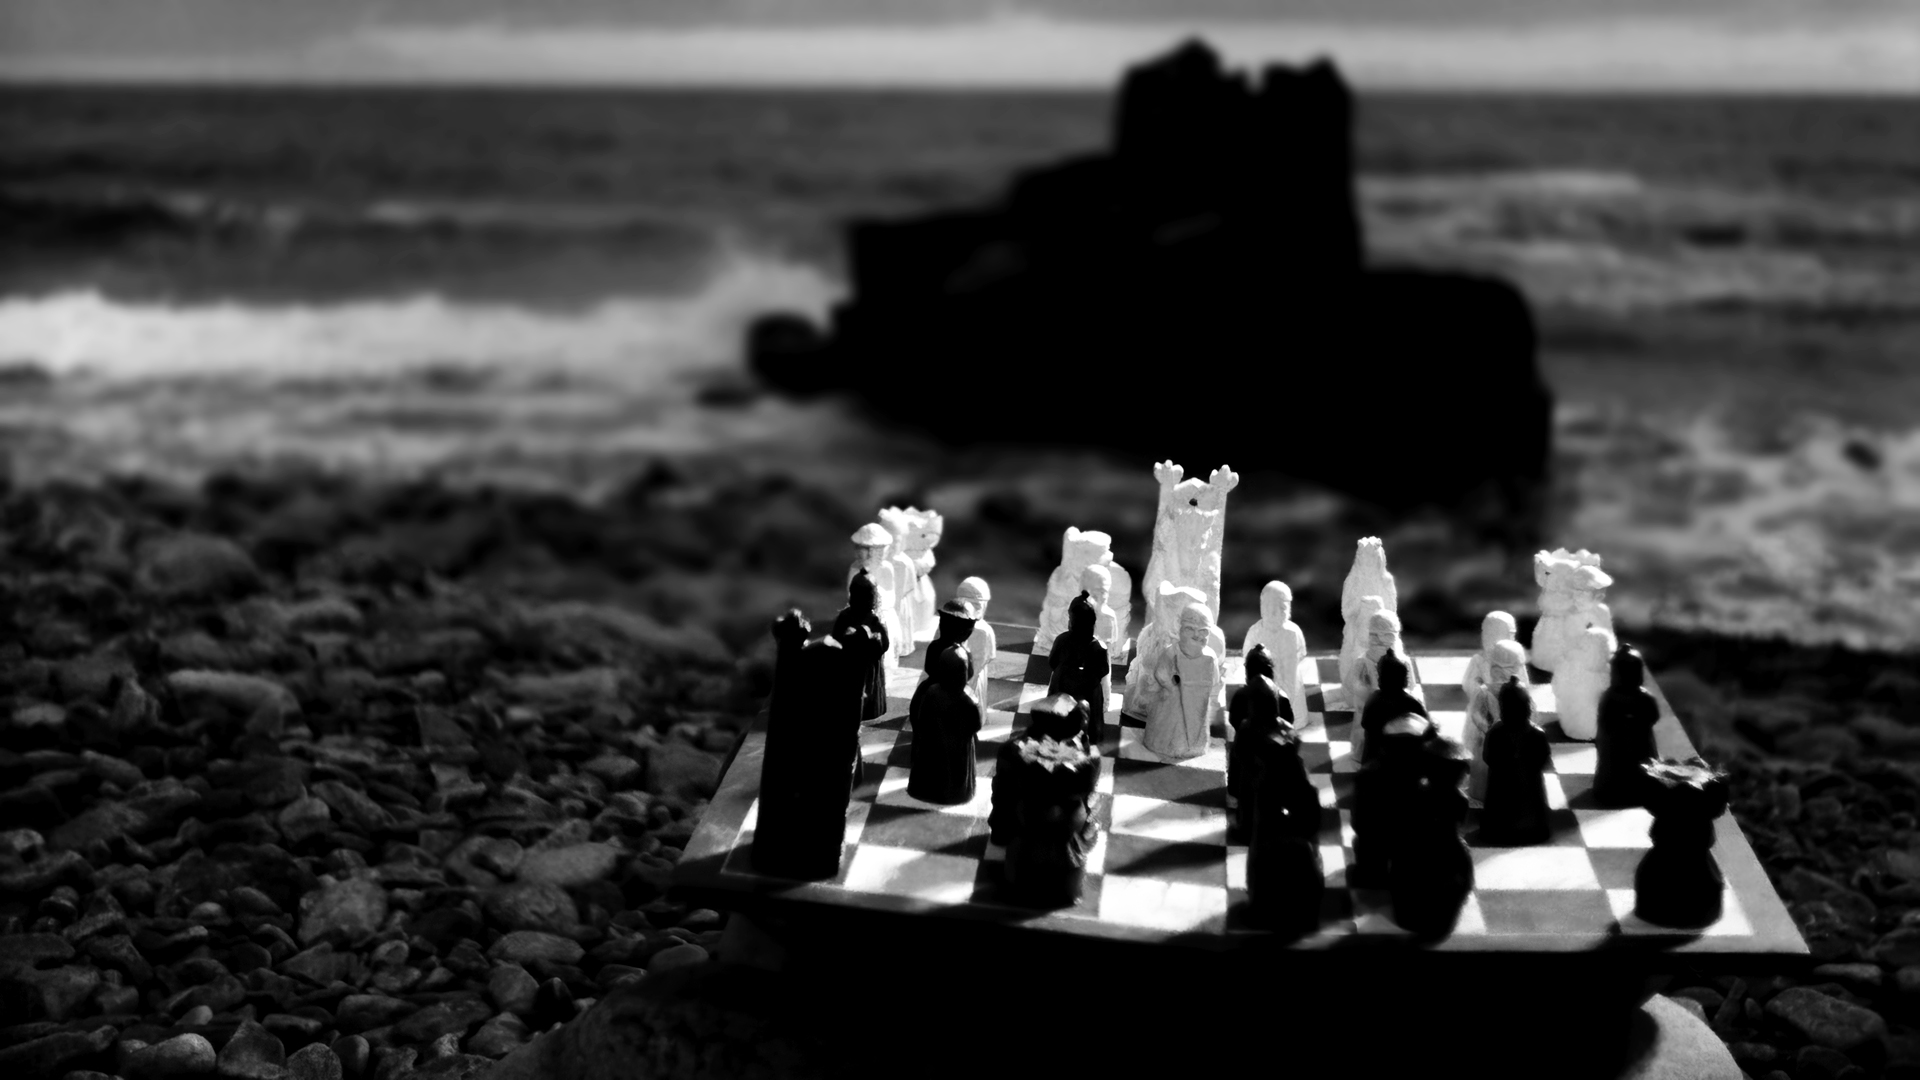 General 1920x1080 The Seventh Seal movies film stills chess monochrome rocks waves shore